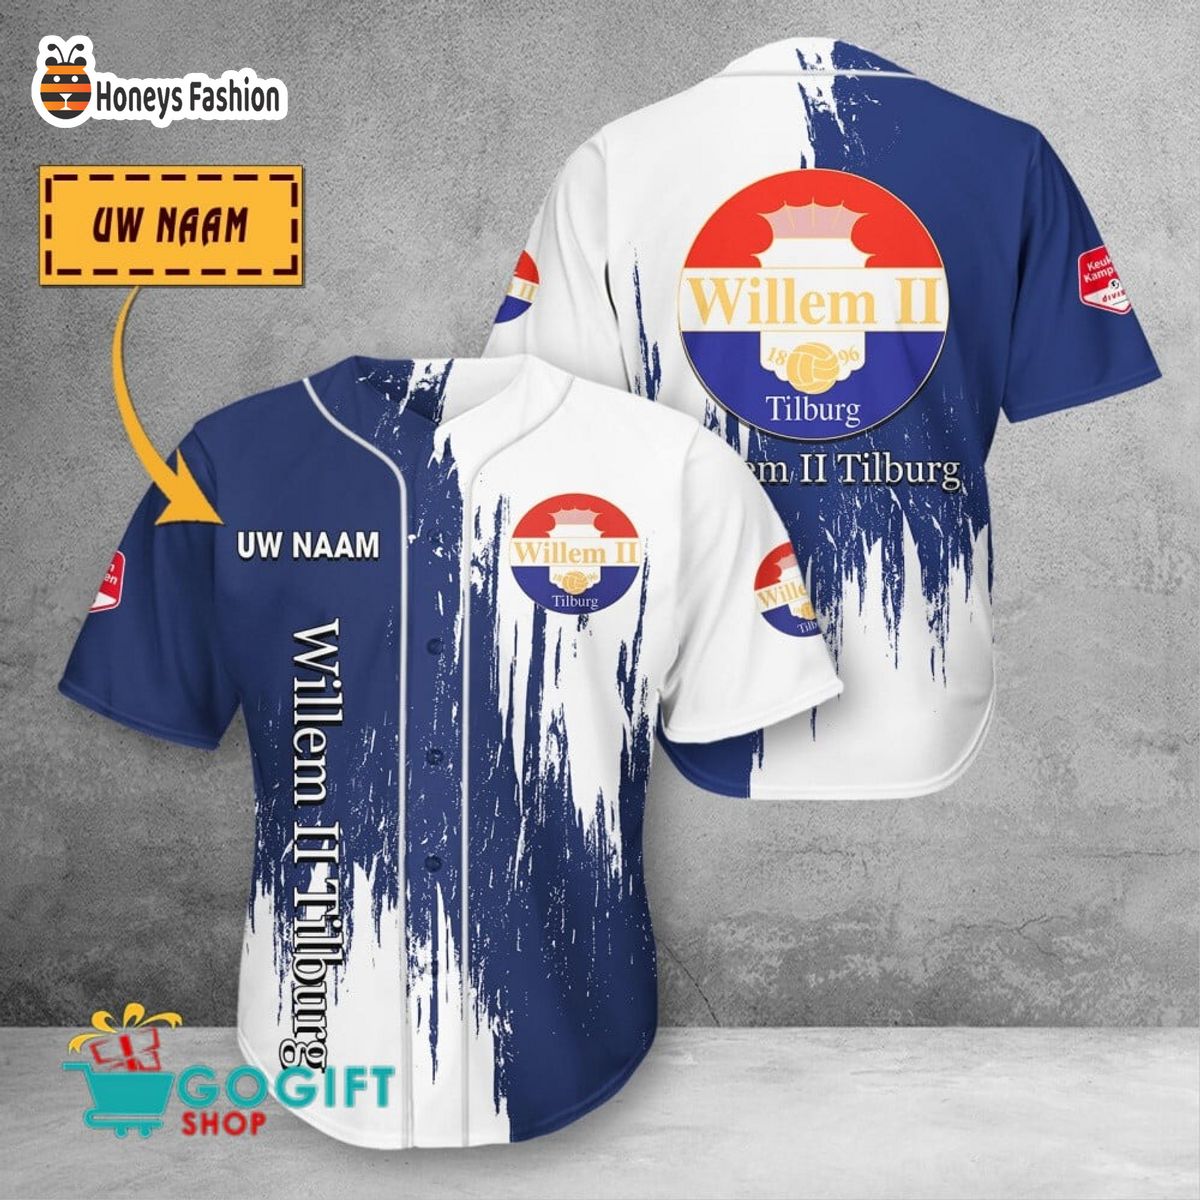 Willem II Tilburg custom name baseball shirt